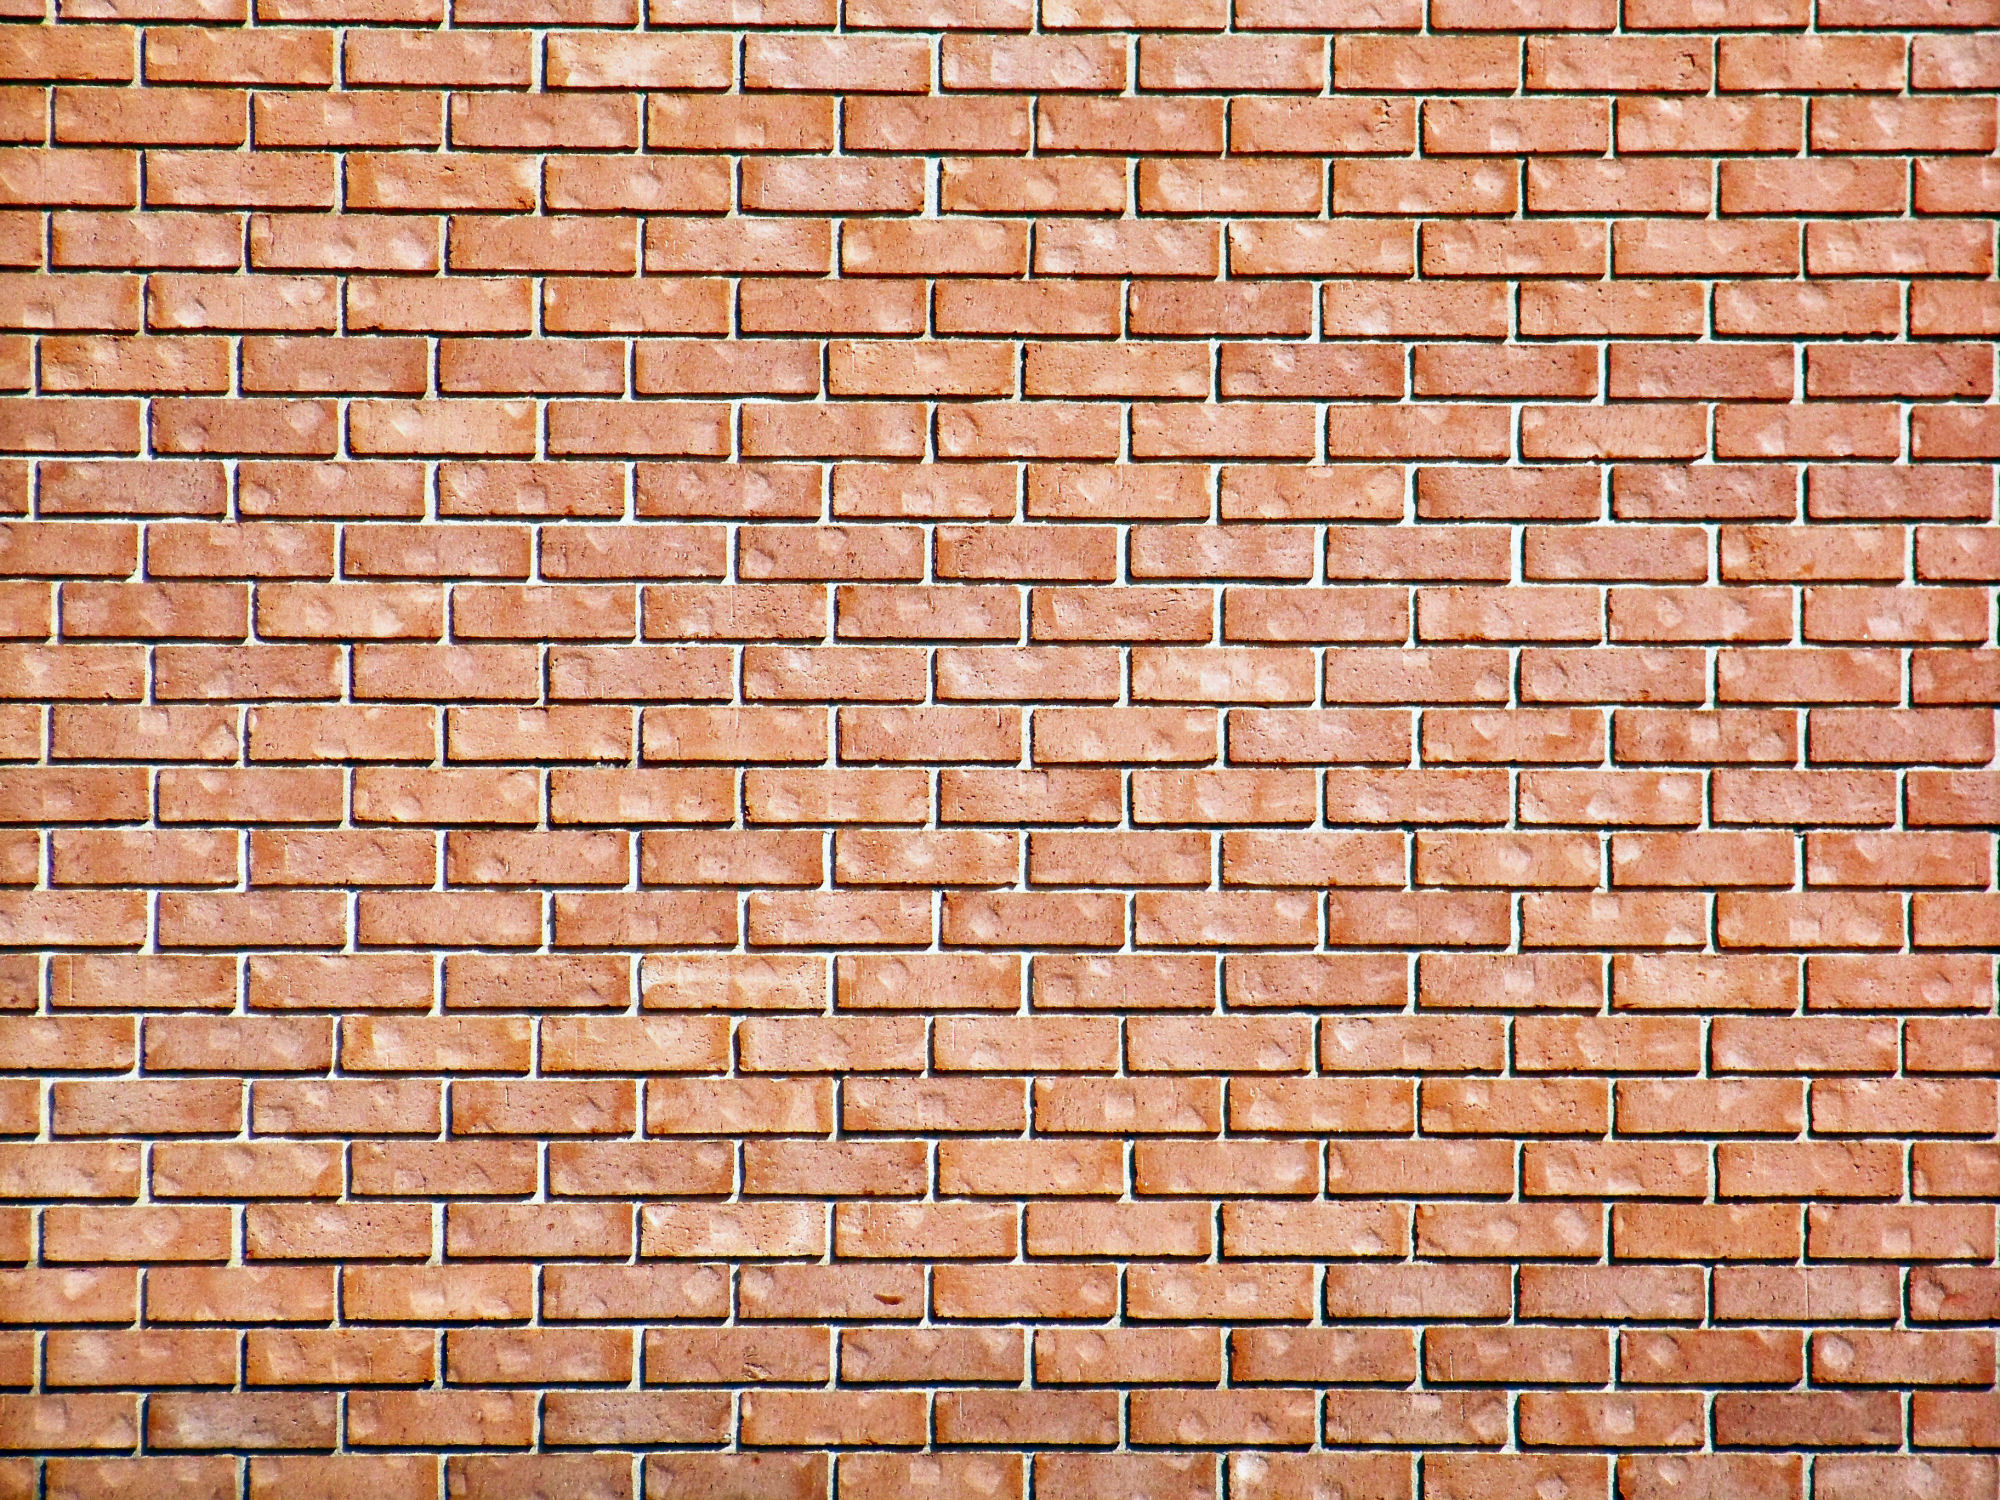     Brick Wall Texture Bricks Brick Wall Texture Background Download